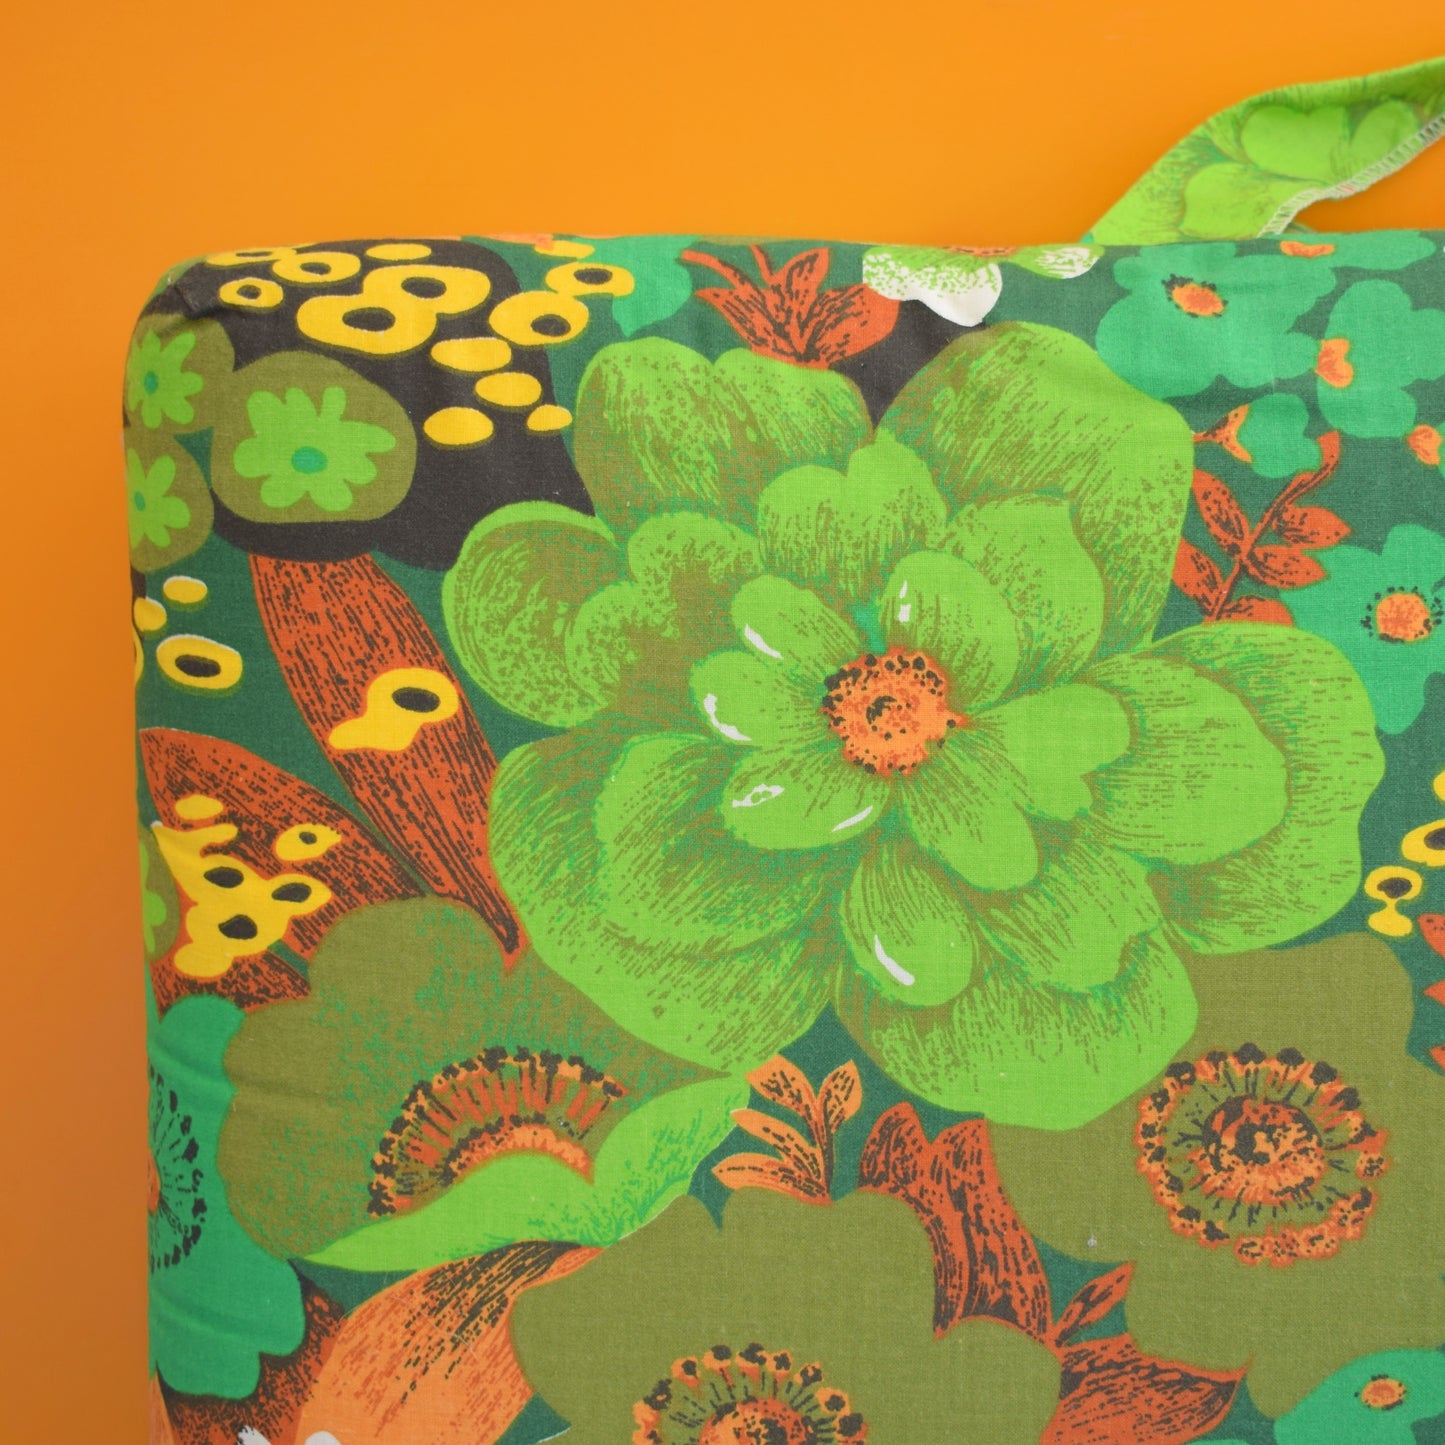 Vintage 1960s Padded Long Folding Cushion - Green Flower Power